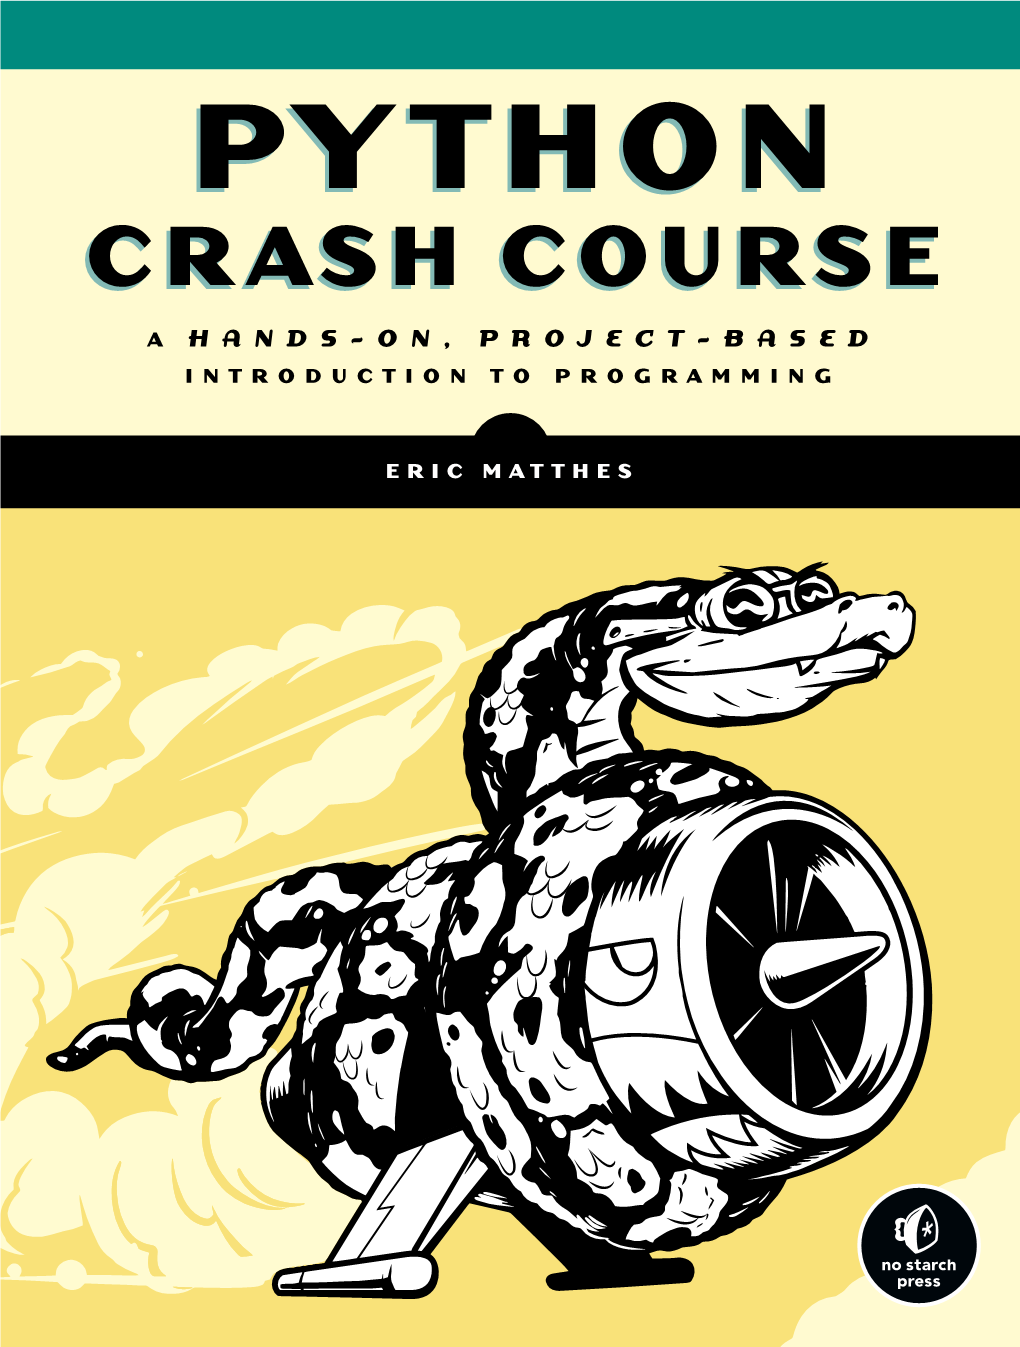 Python Python Crash Course Crash Python Ppyy Thonthon Ccrr Ashash Coursecourse